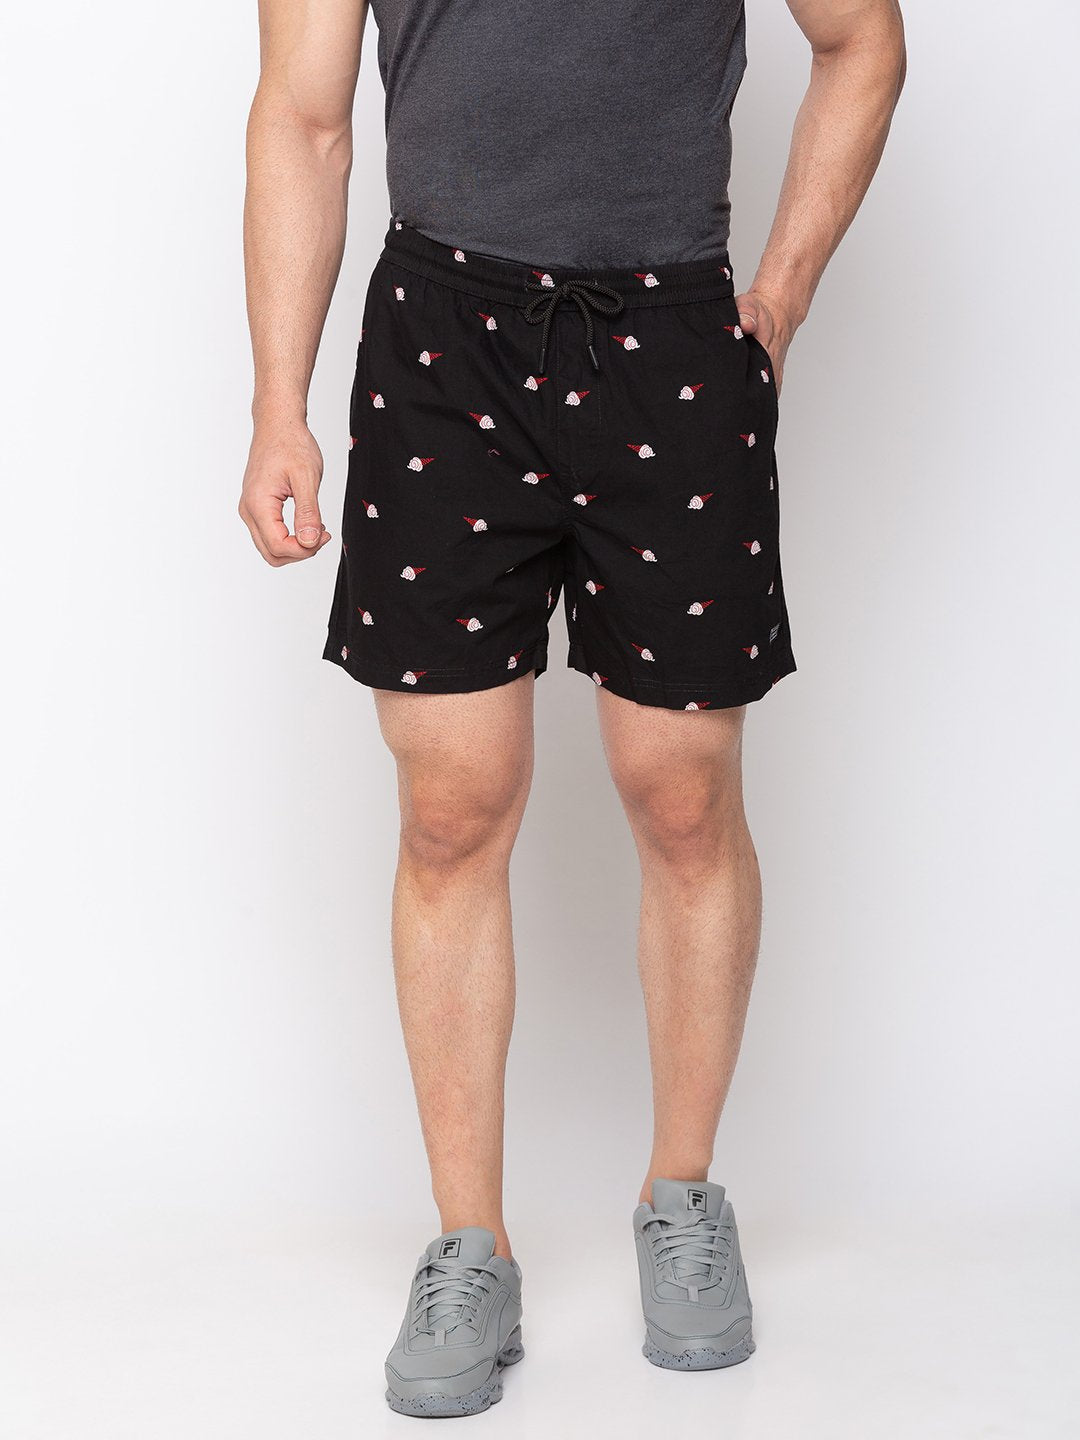 Status Quo |Printed Regular Fit Shorts - M, L, XL, XXL